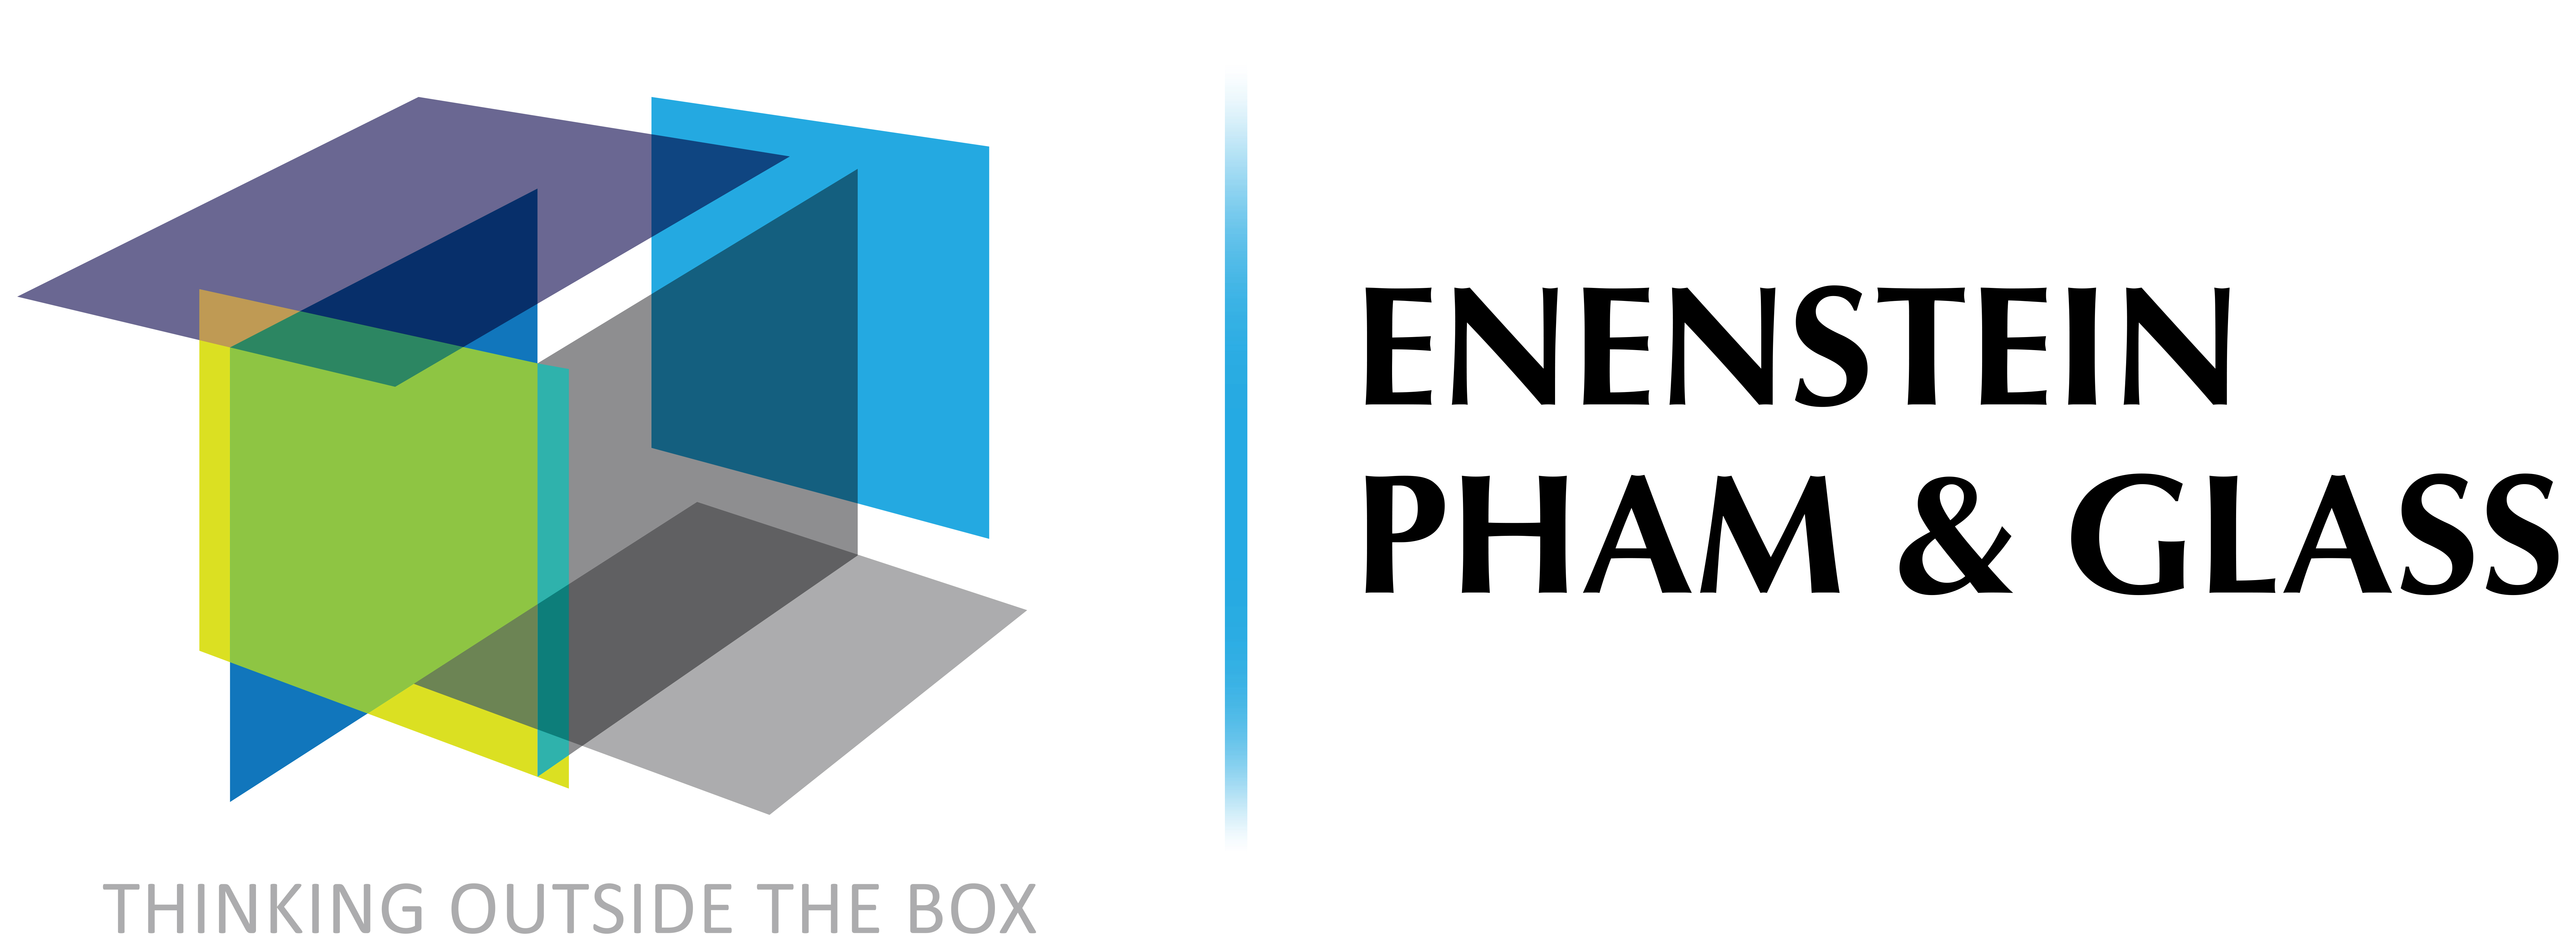 Enenstein Pham & Glass